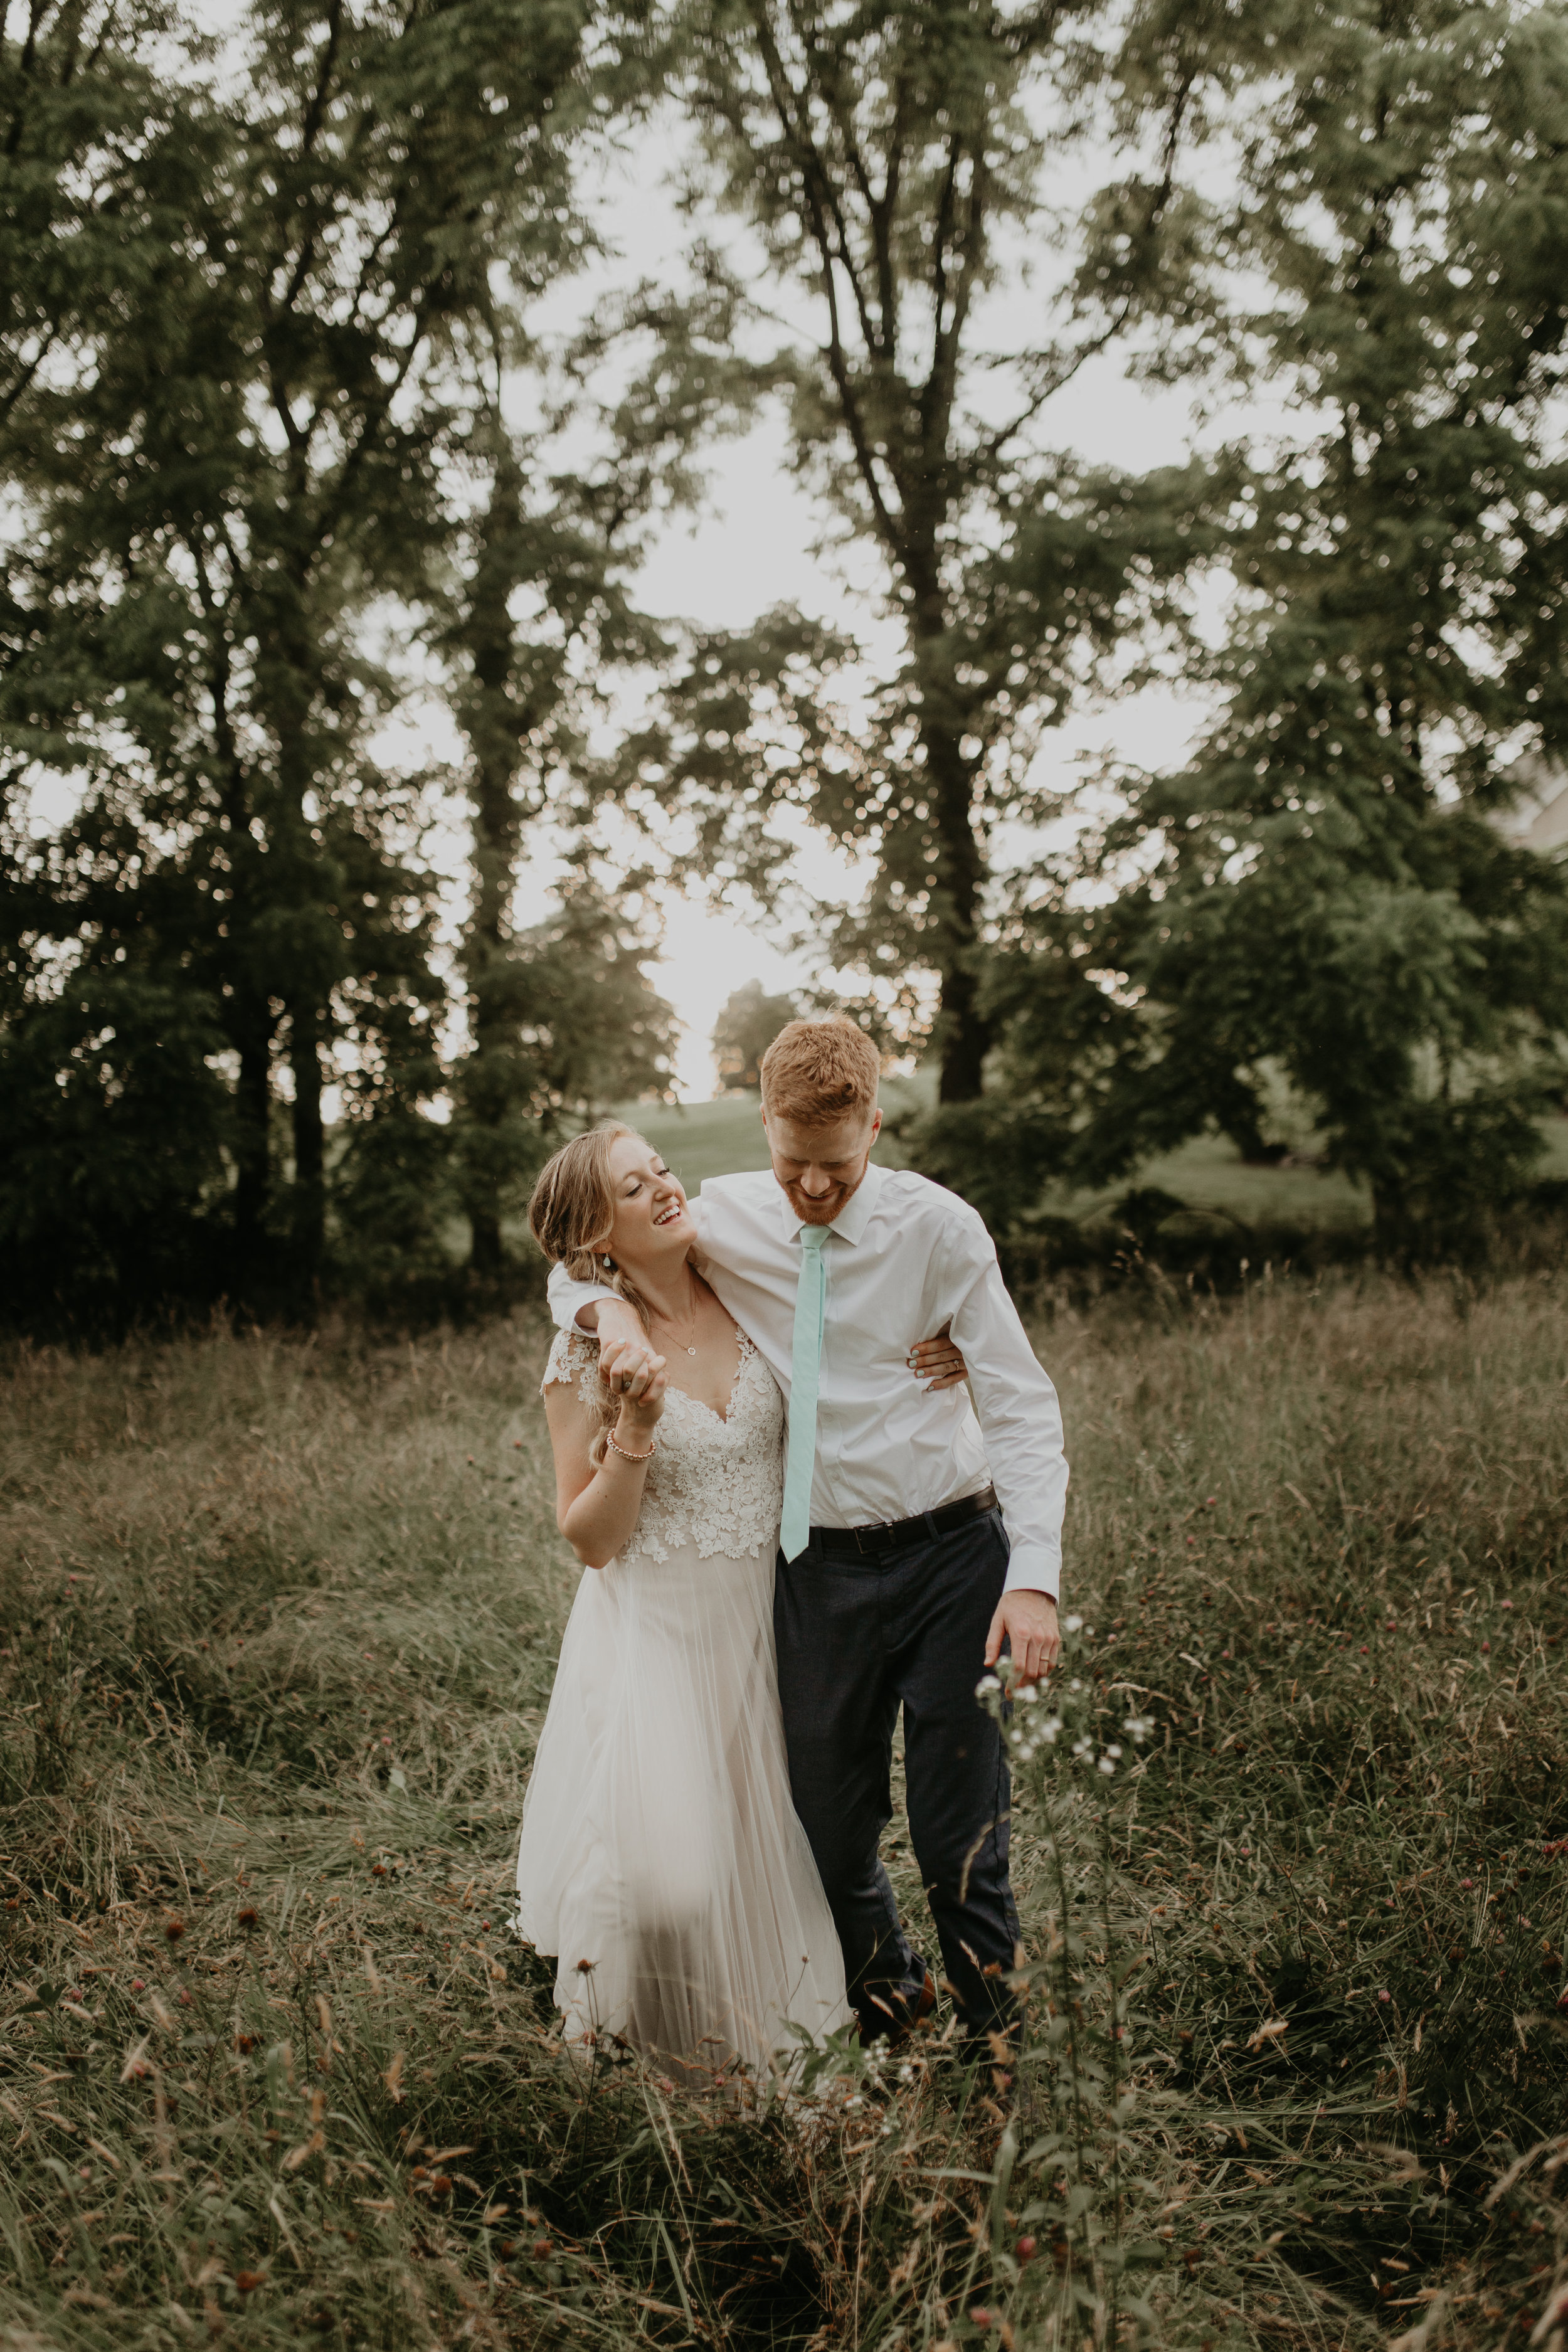 Nicole-Daacke-Photography-pennsylvania-laid-back-outside-backyard-wedding-family-summer-june-maryland-barefoot-bride-woodland-trees-sunset-couple-80.jpg